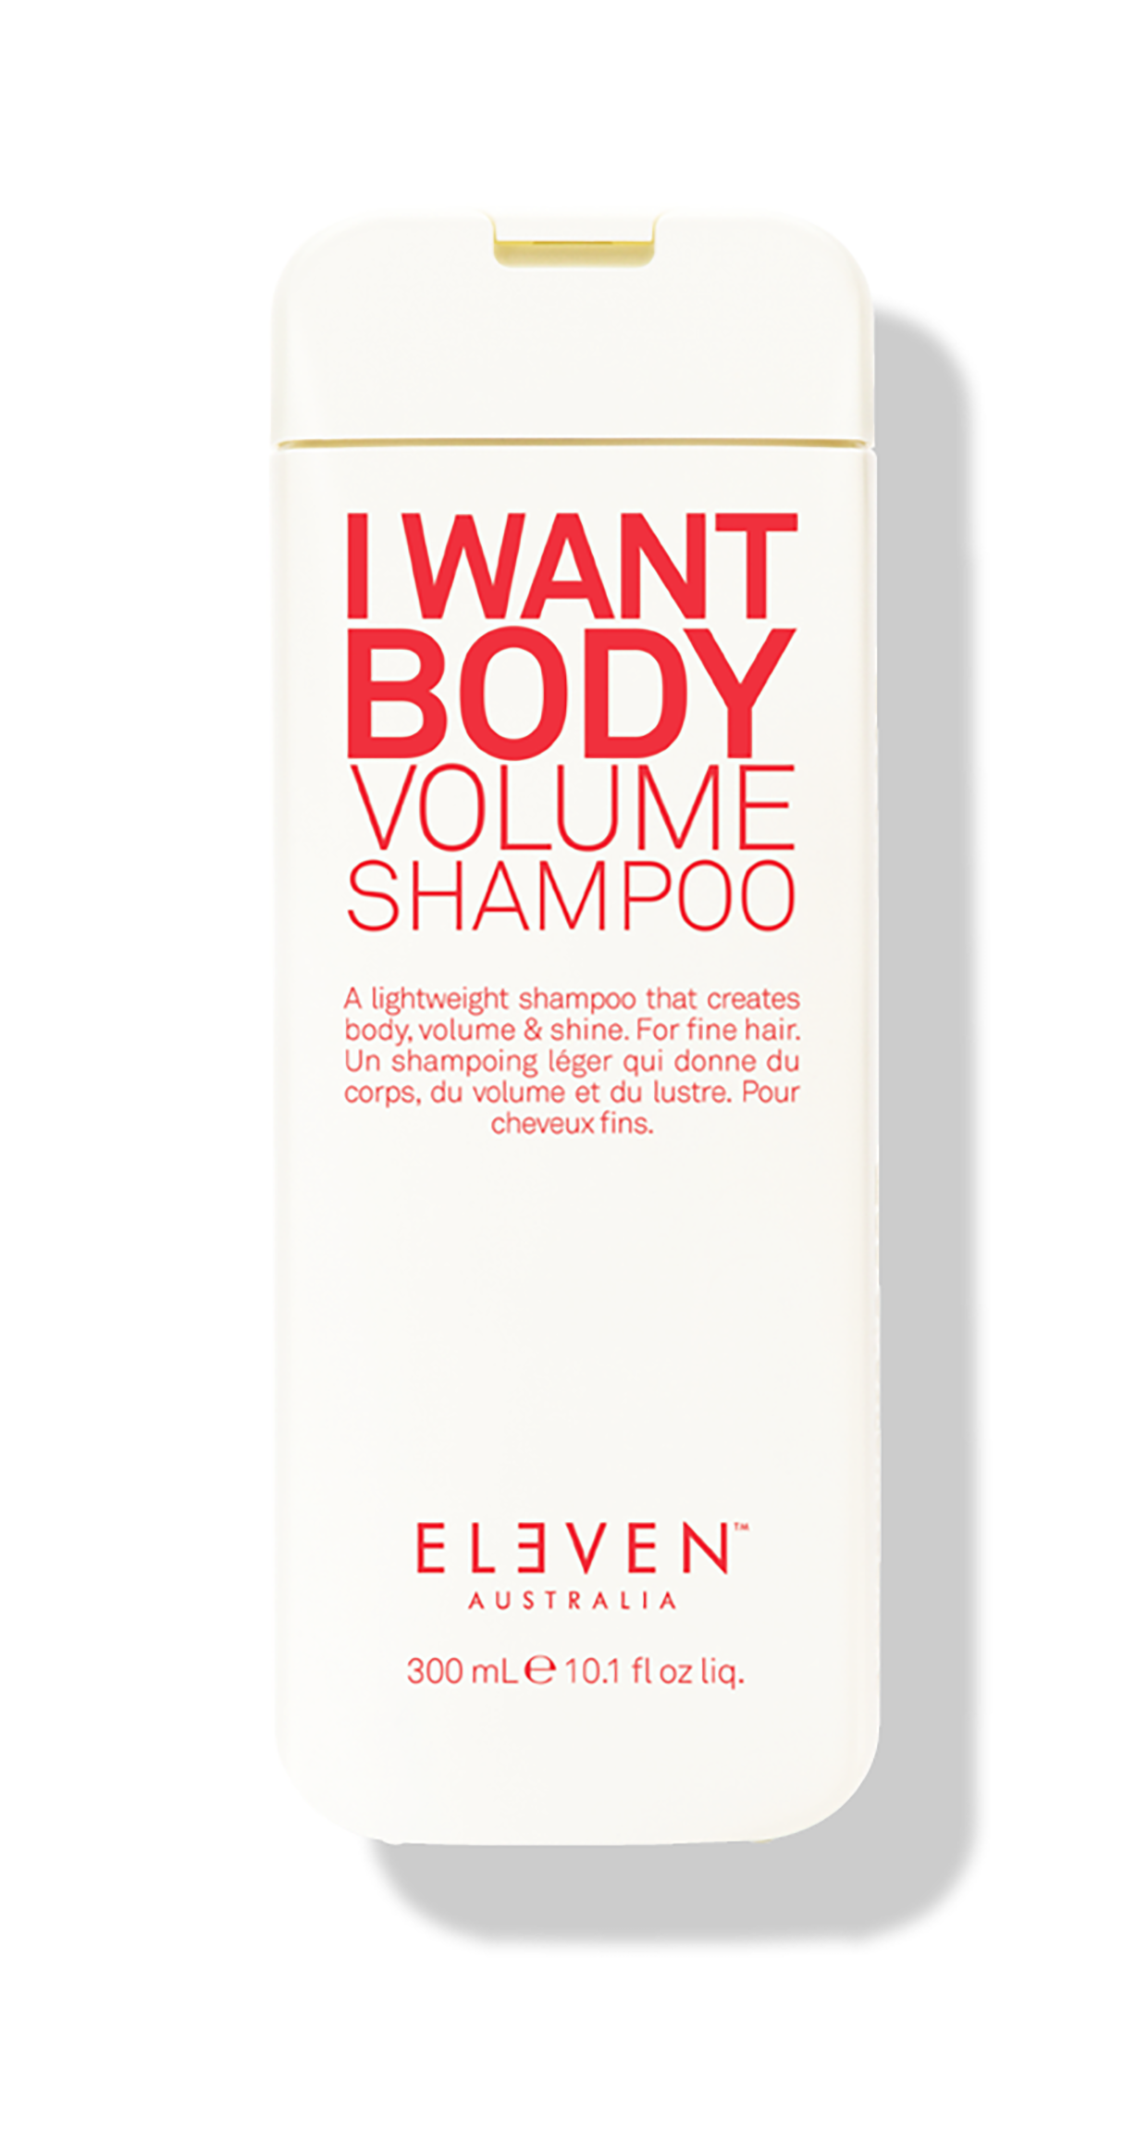 ELEVEN hair I WANT BODY VOLUME SHAMPOO lightweight creates body volume and shine ELEVEN Shampoo